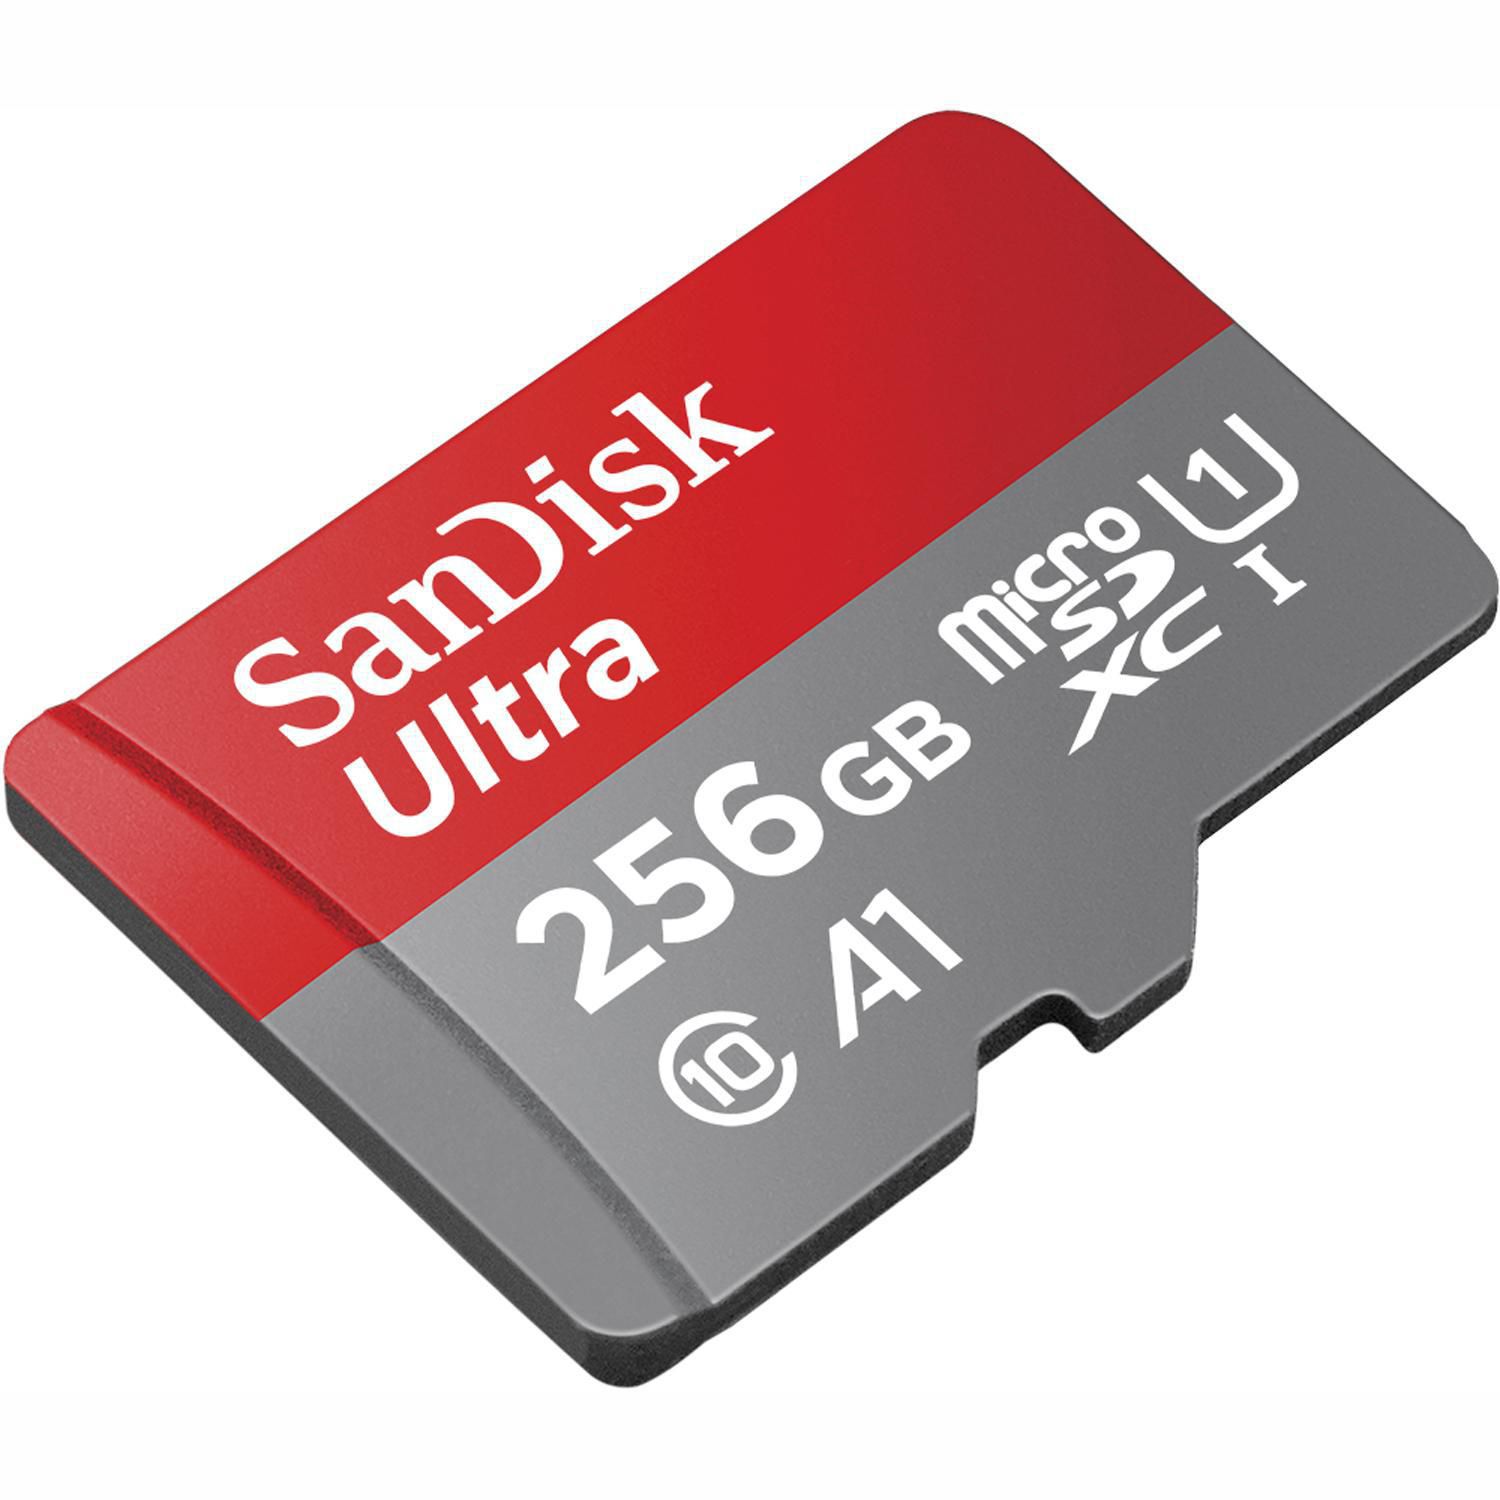 SanDisk 256GB Ultra® microSDXC ™ UHS-I memory card, The SanDisk